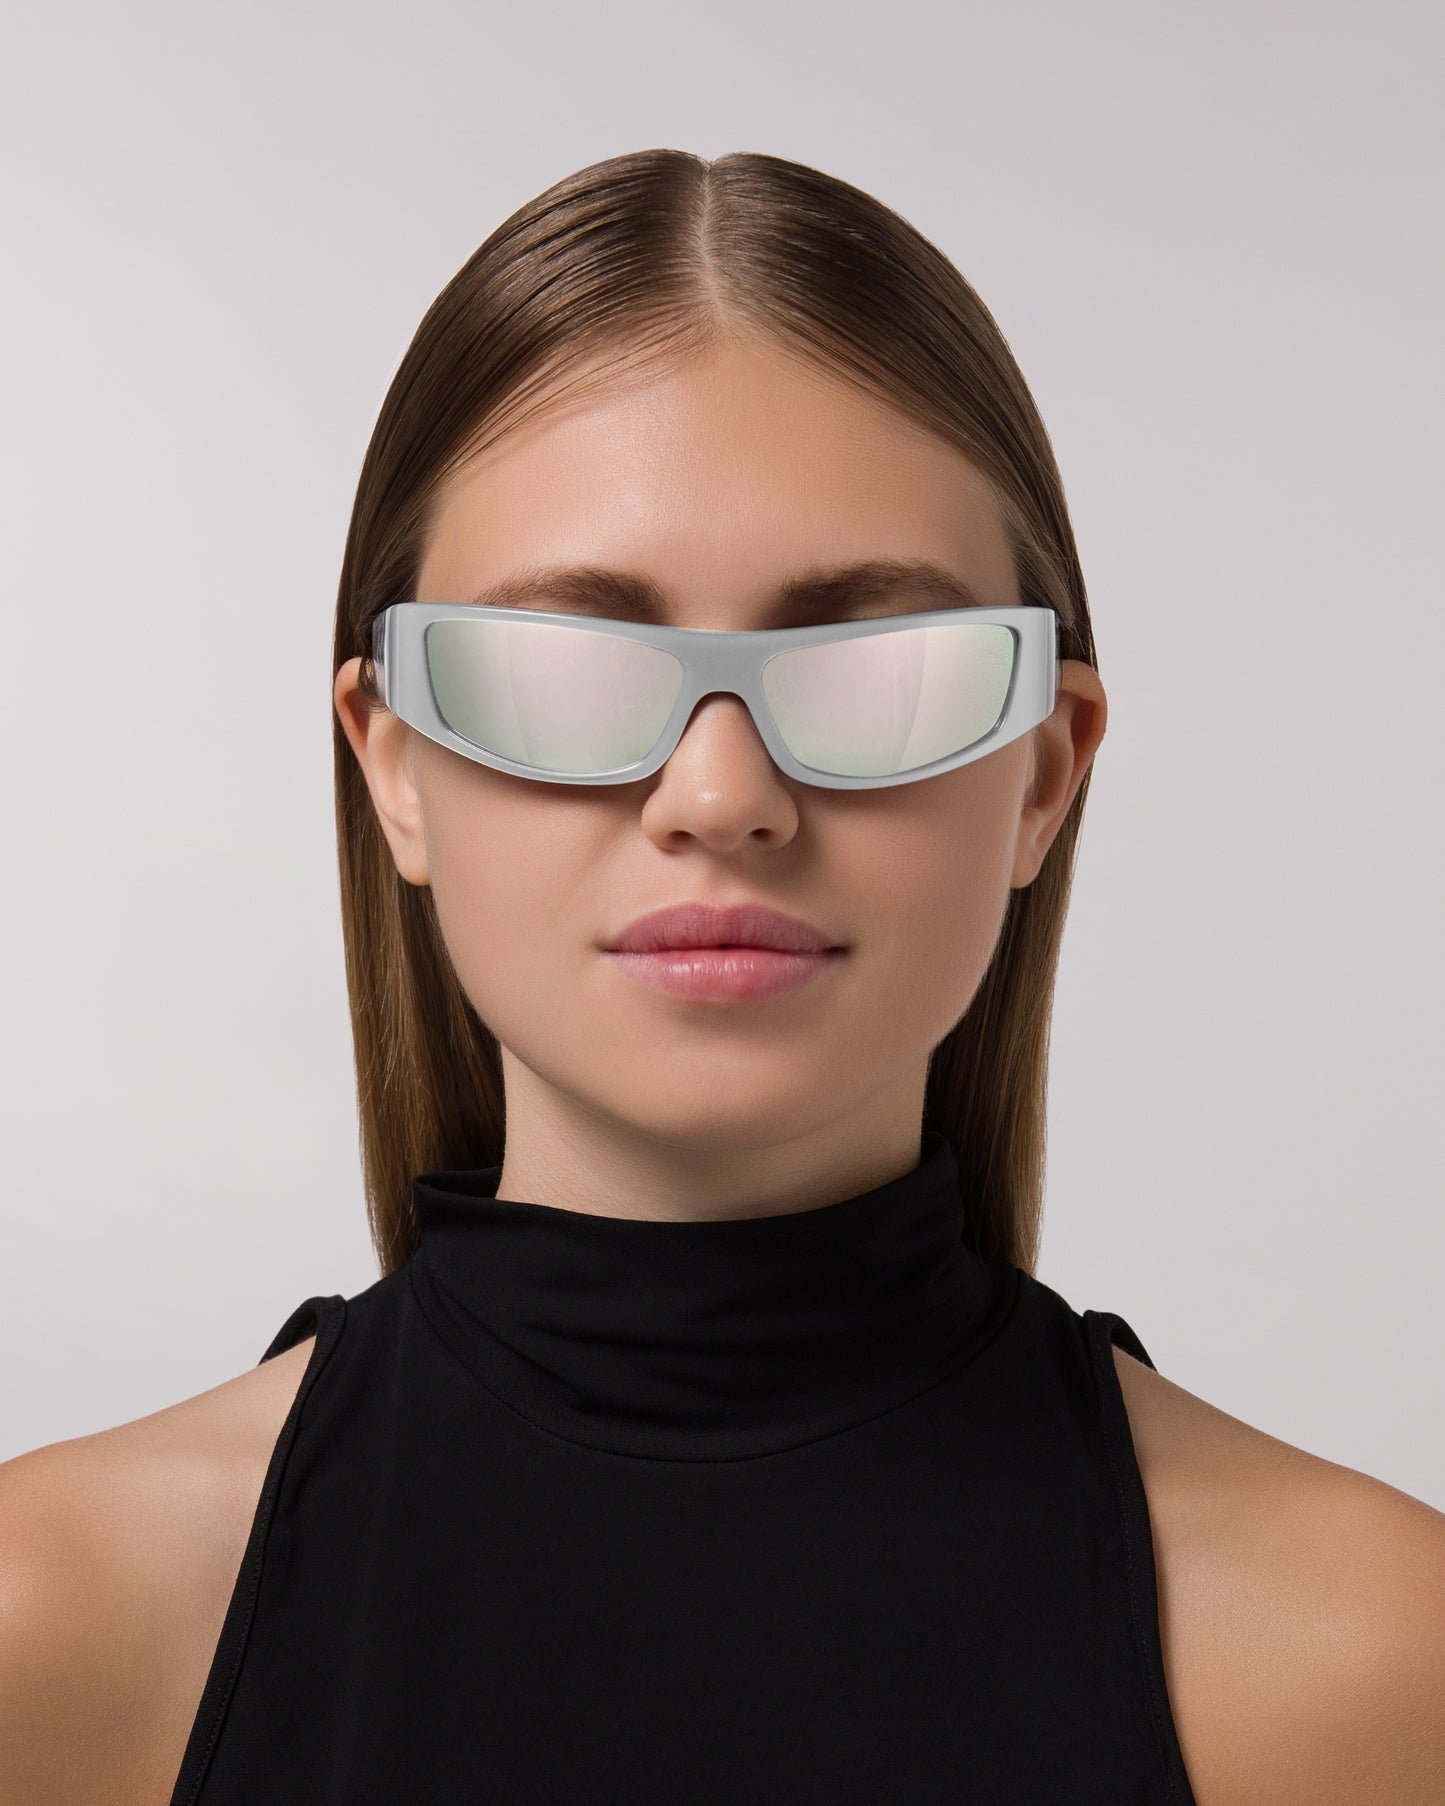 Front view | Rectangular sunglasses with mirror silver lenses and silver frames | Acetate | Sir | Women's sunglasses | Karen Wazen Eyewear